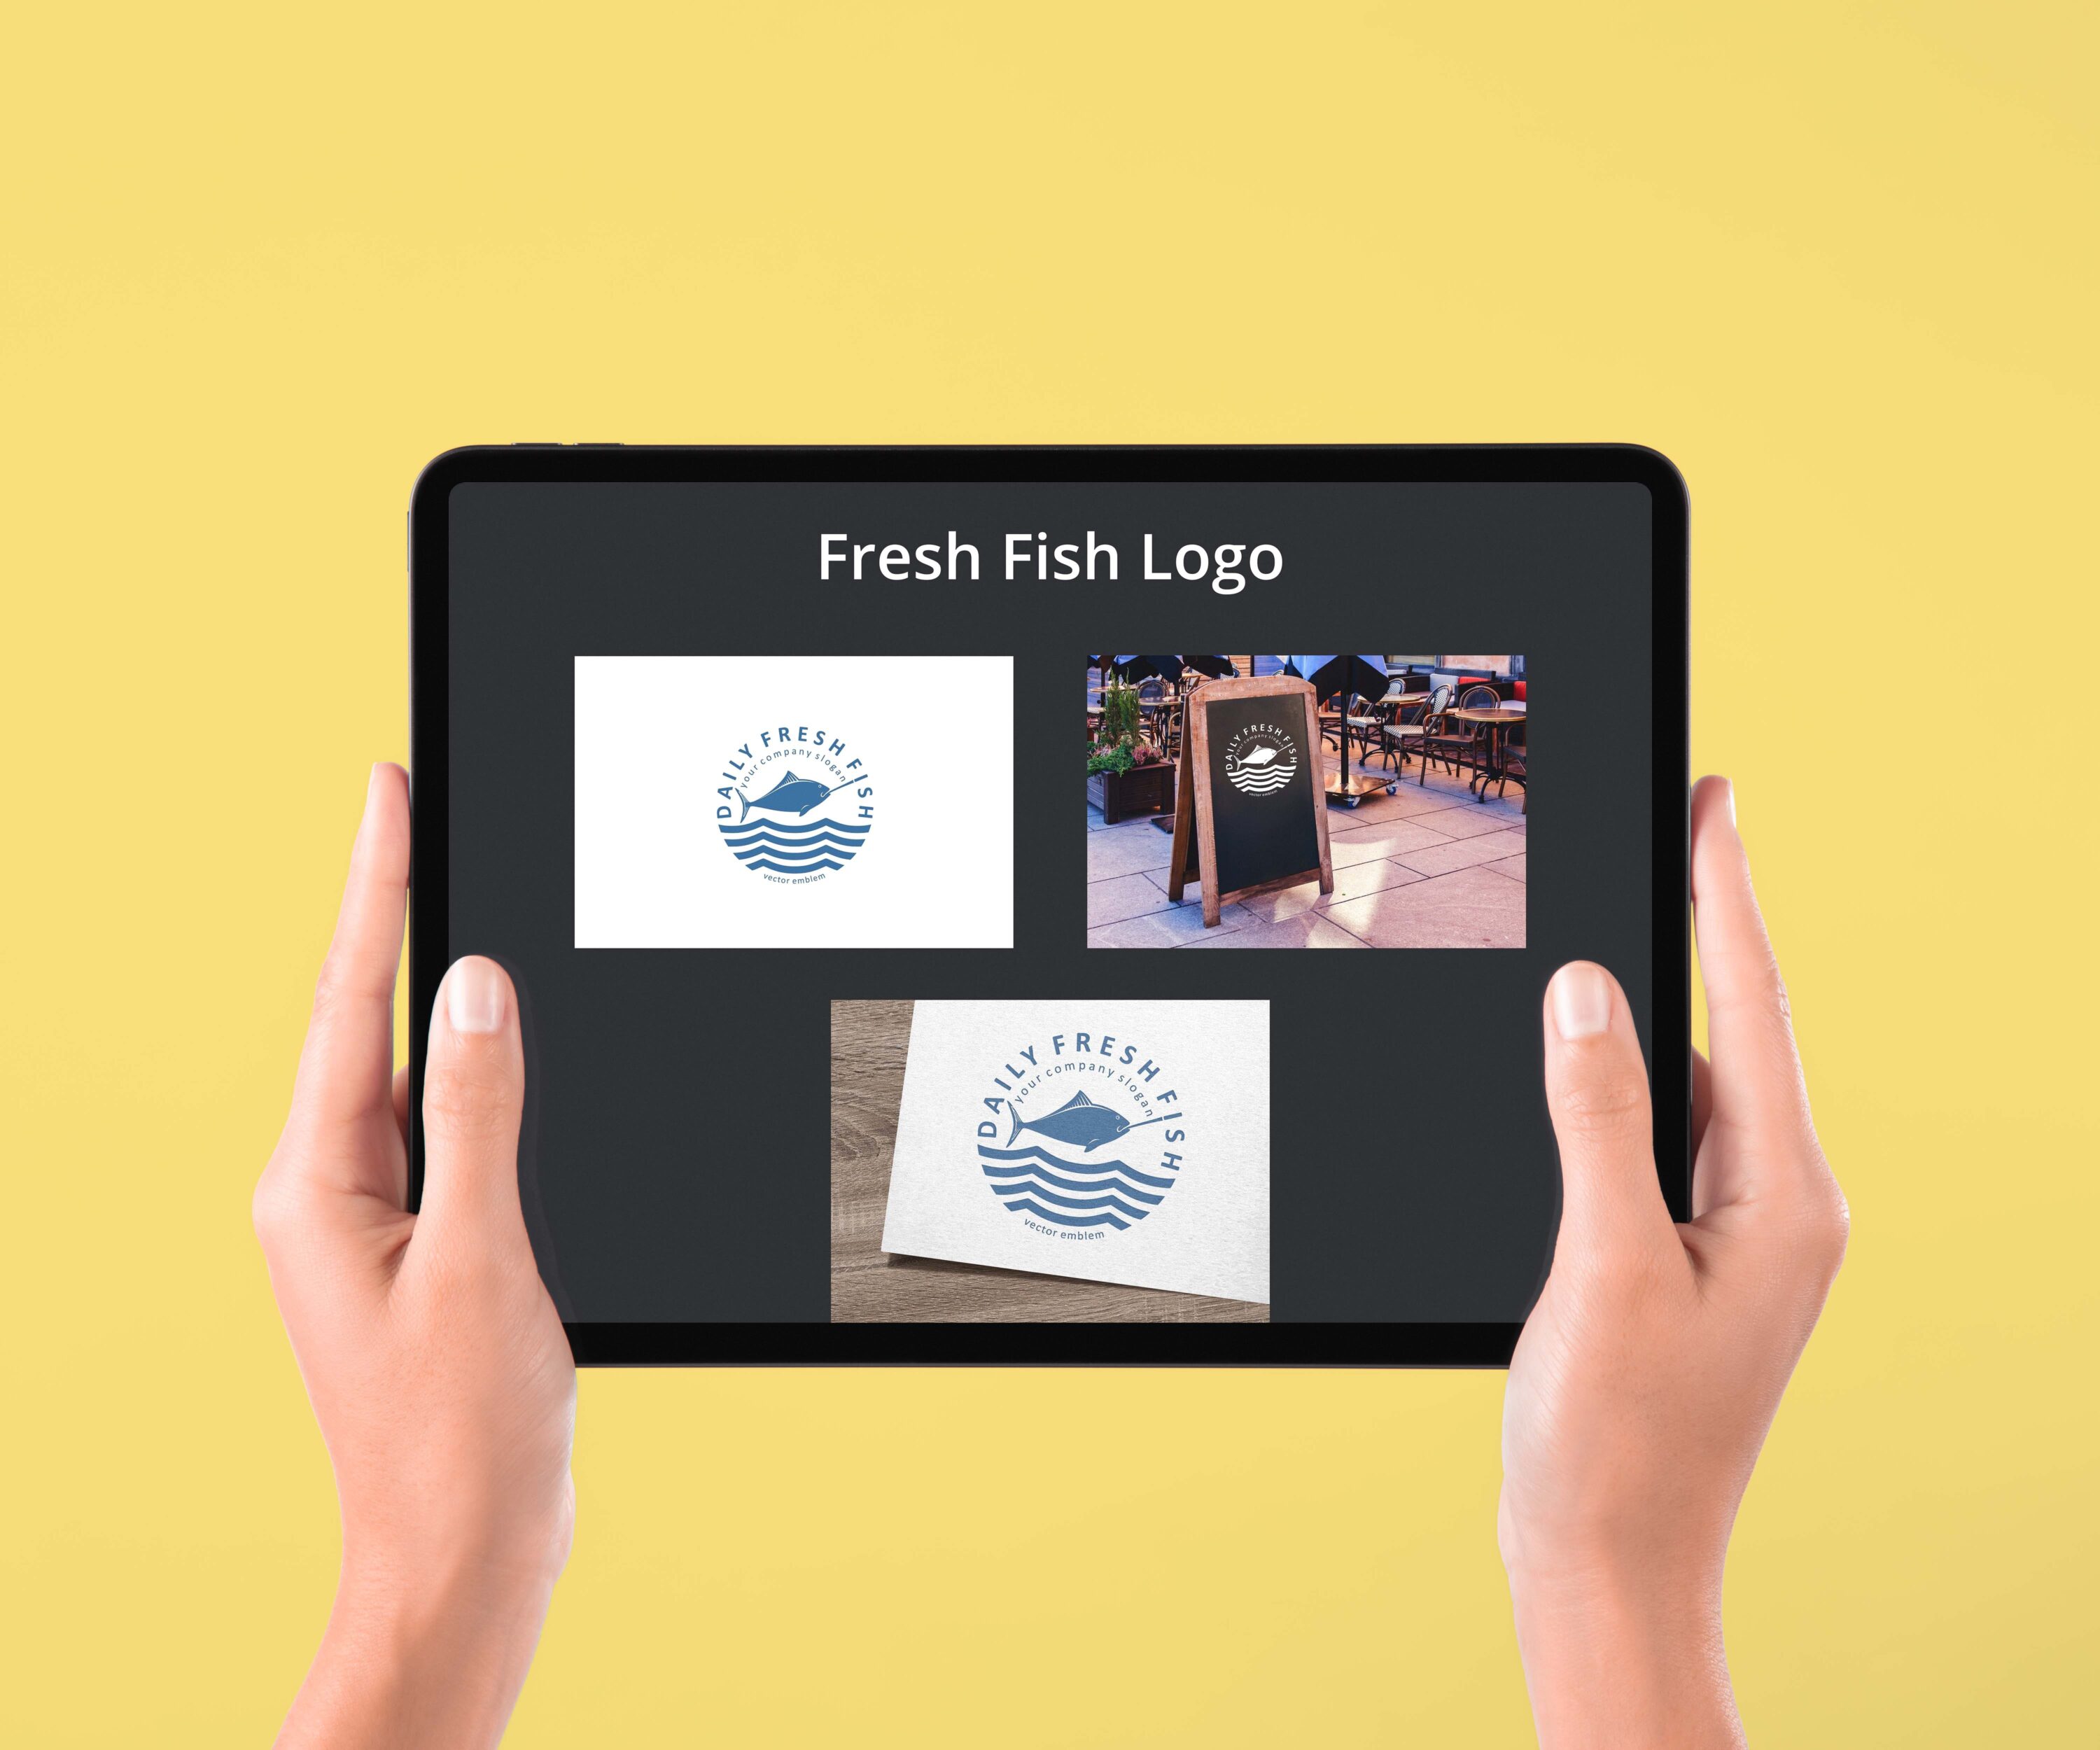 Fresh Fish Logo - tablet.